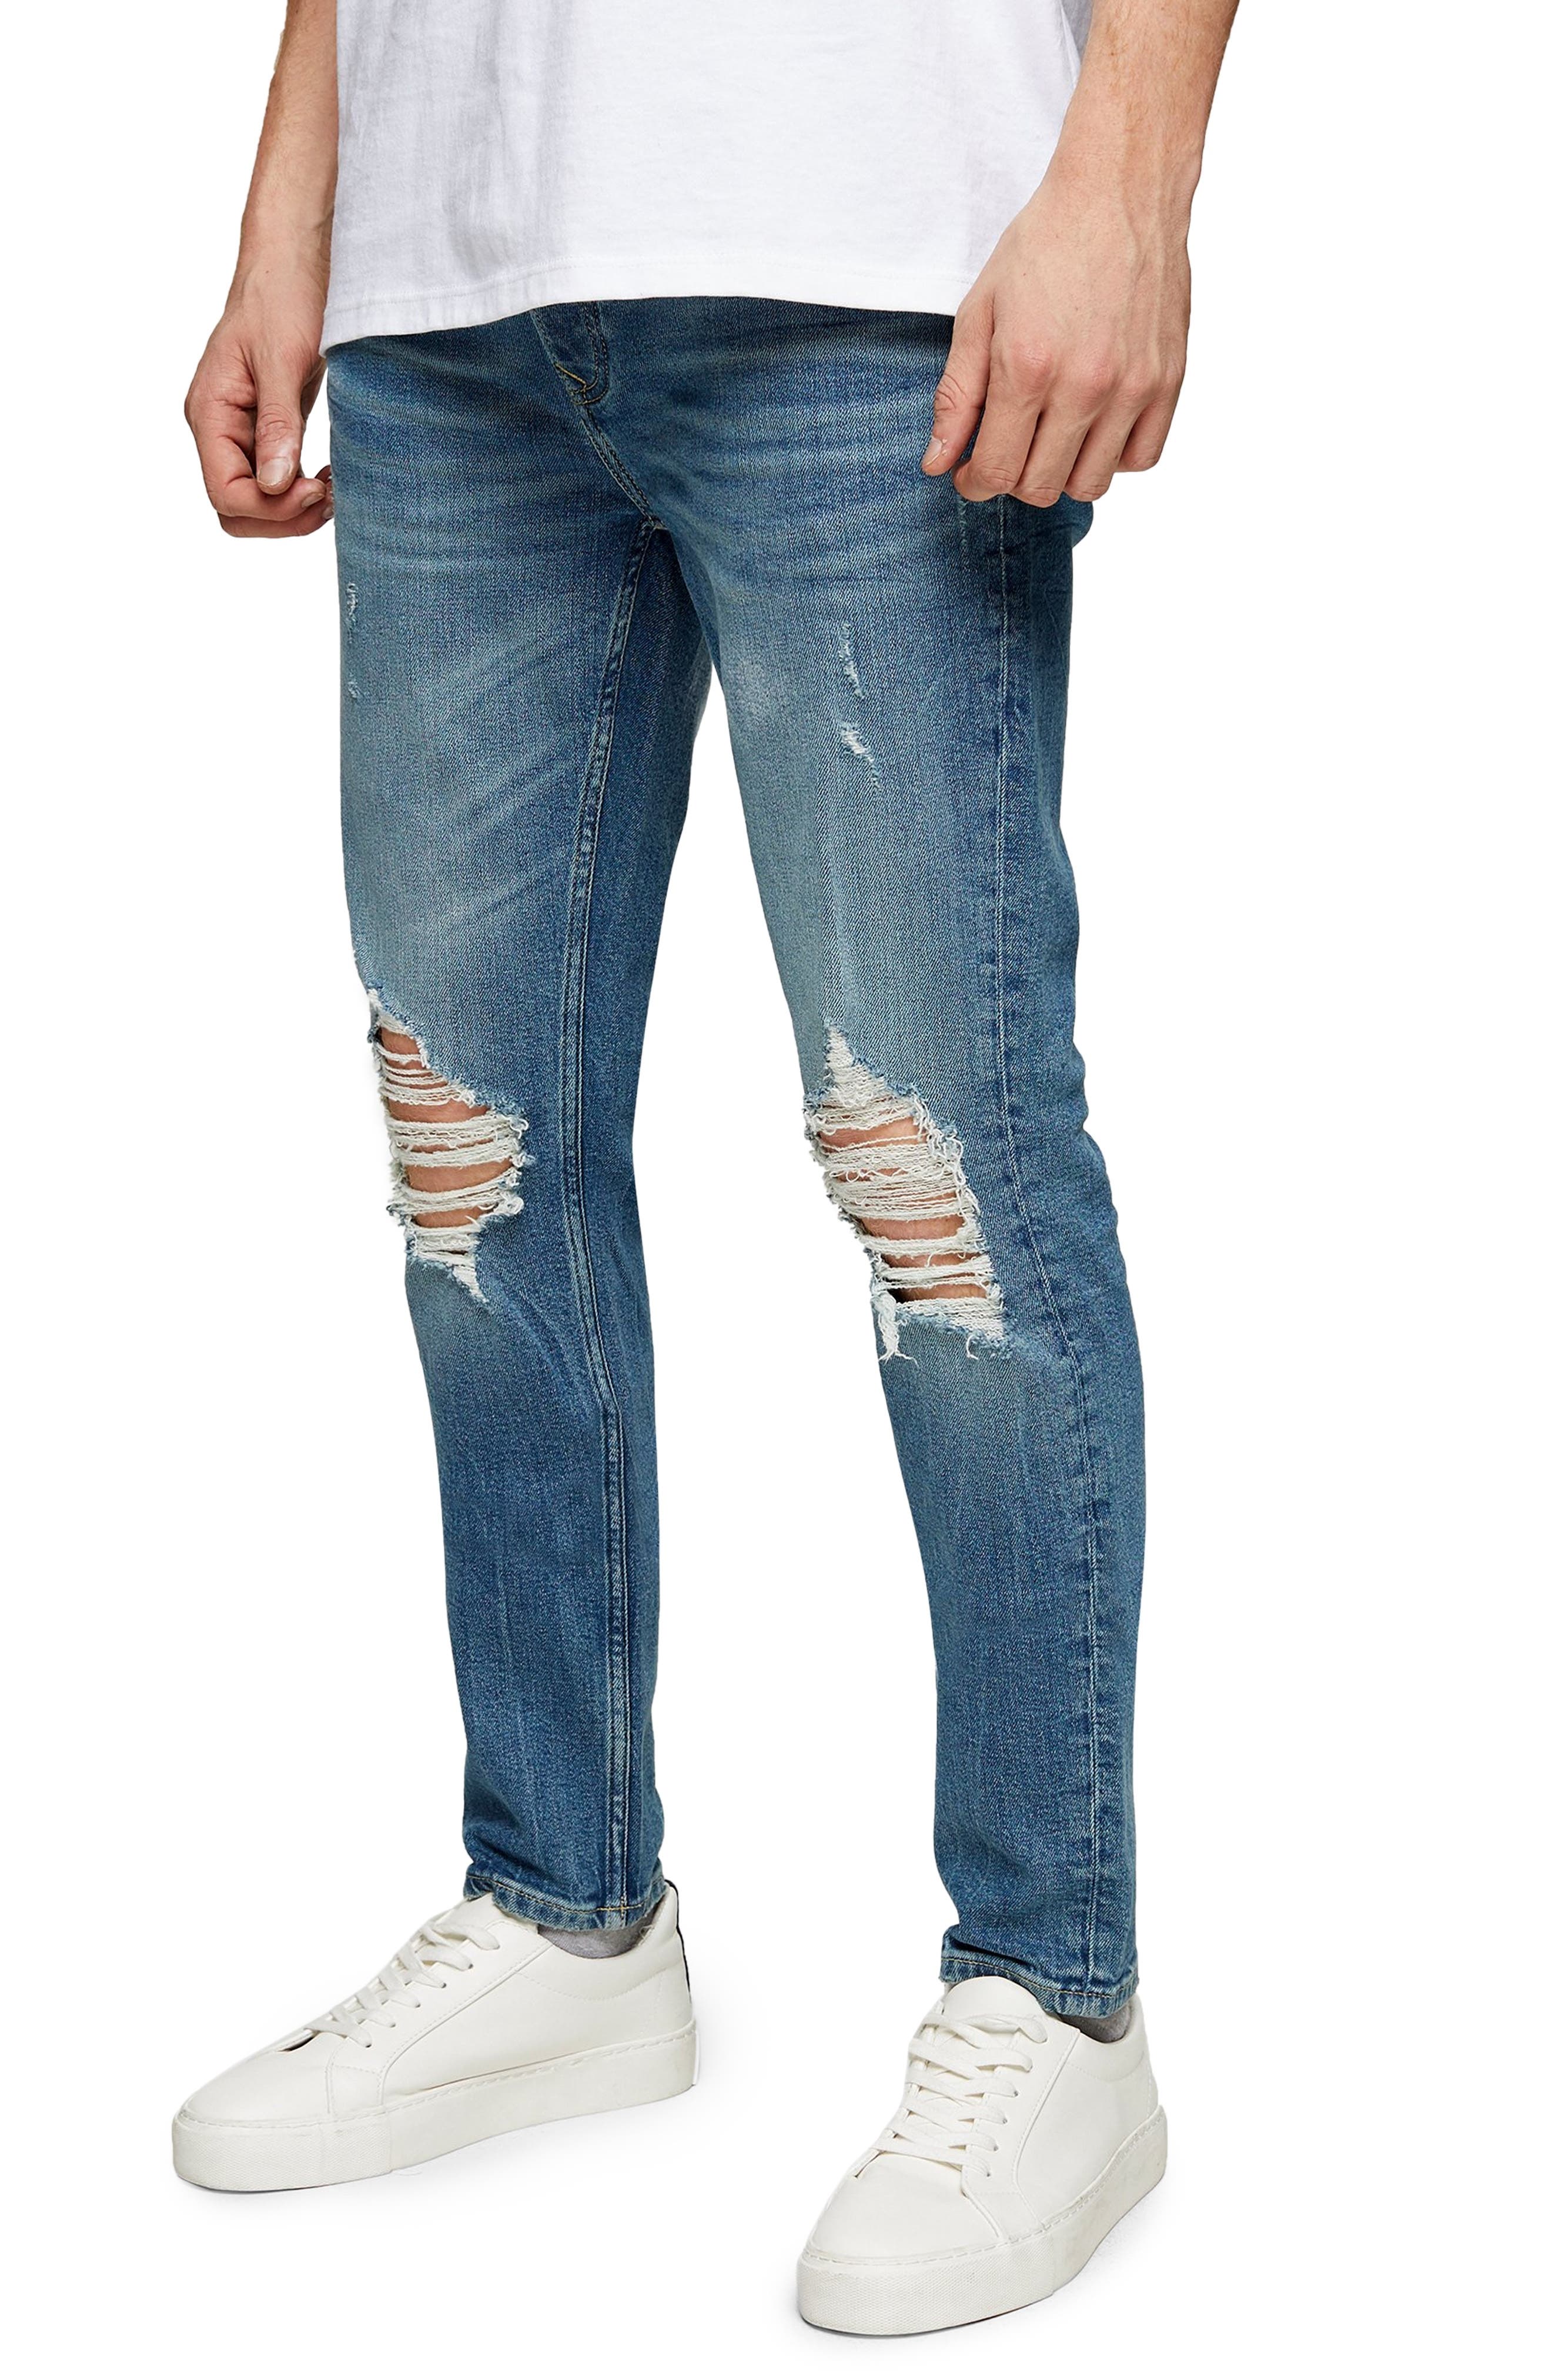 mens skinny jeans under 20 dollars